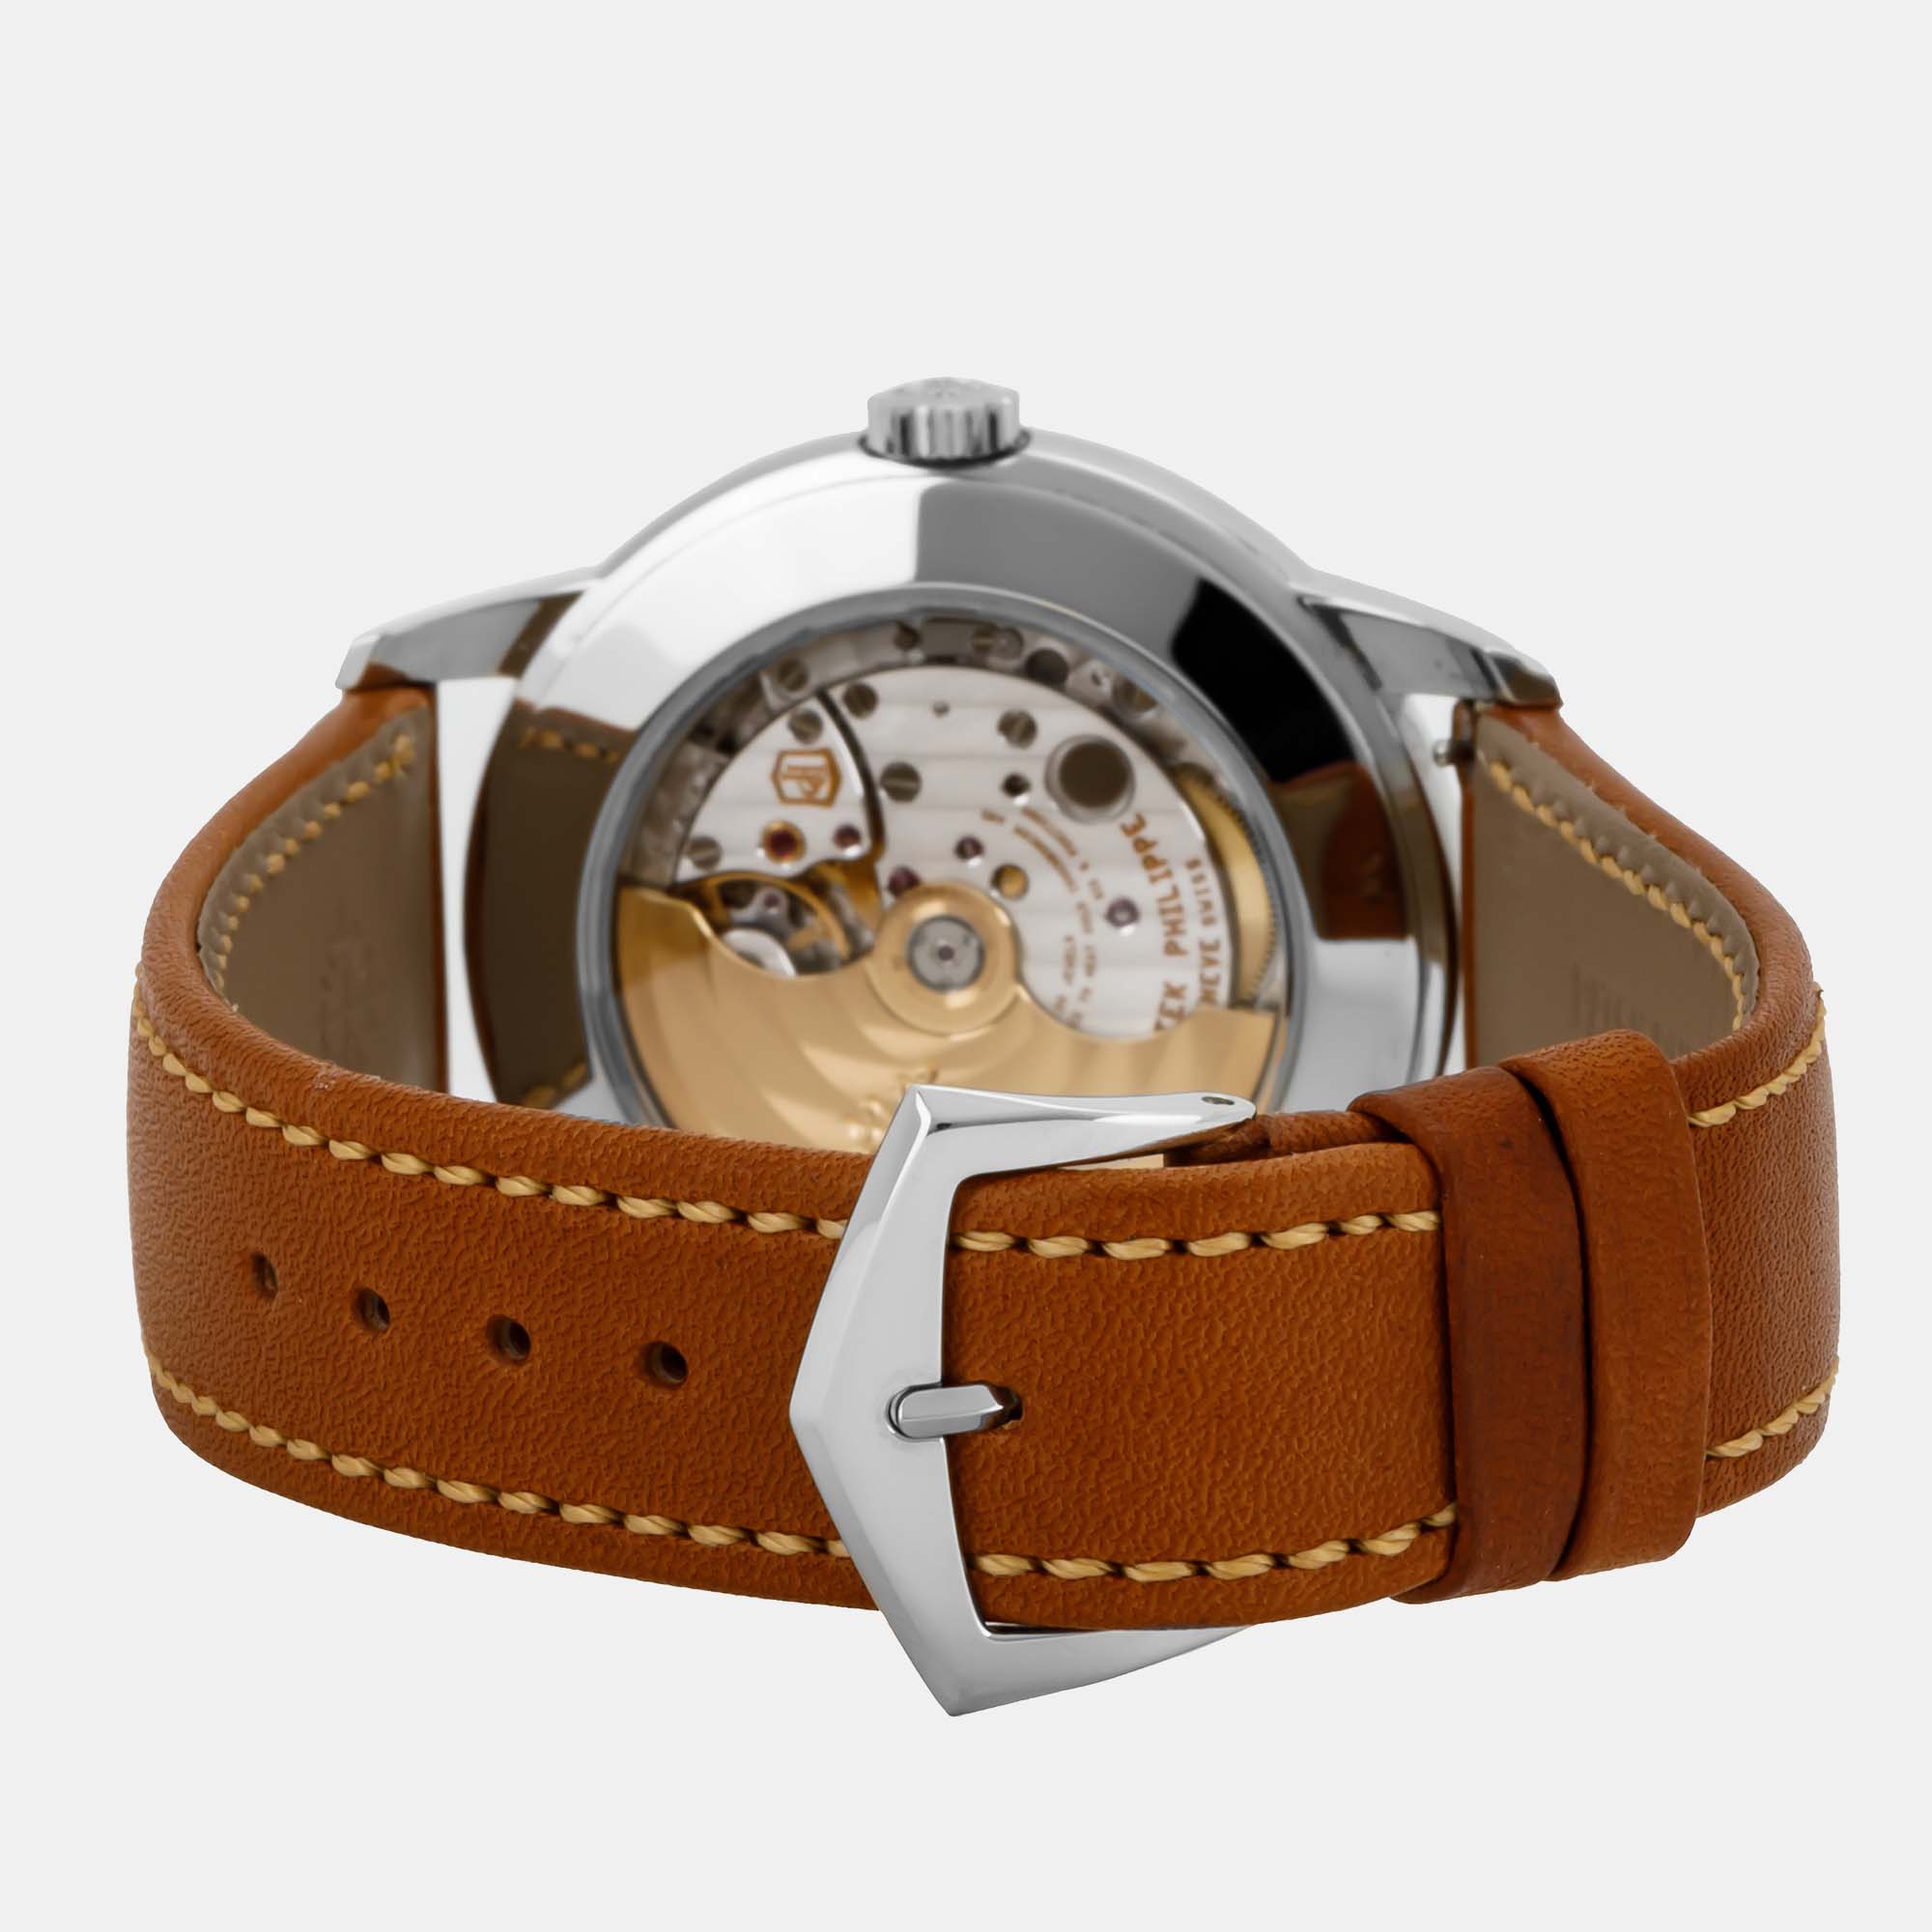 Patek Philippe Silver Stainless Steel Calatrava 5212A-001 Automatic Men's Wristwatch 40 Mm